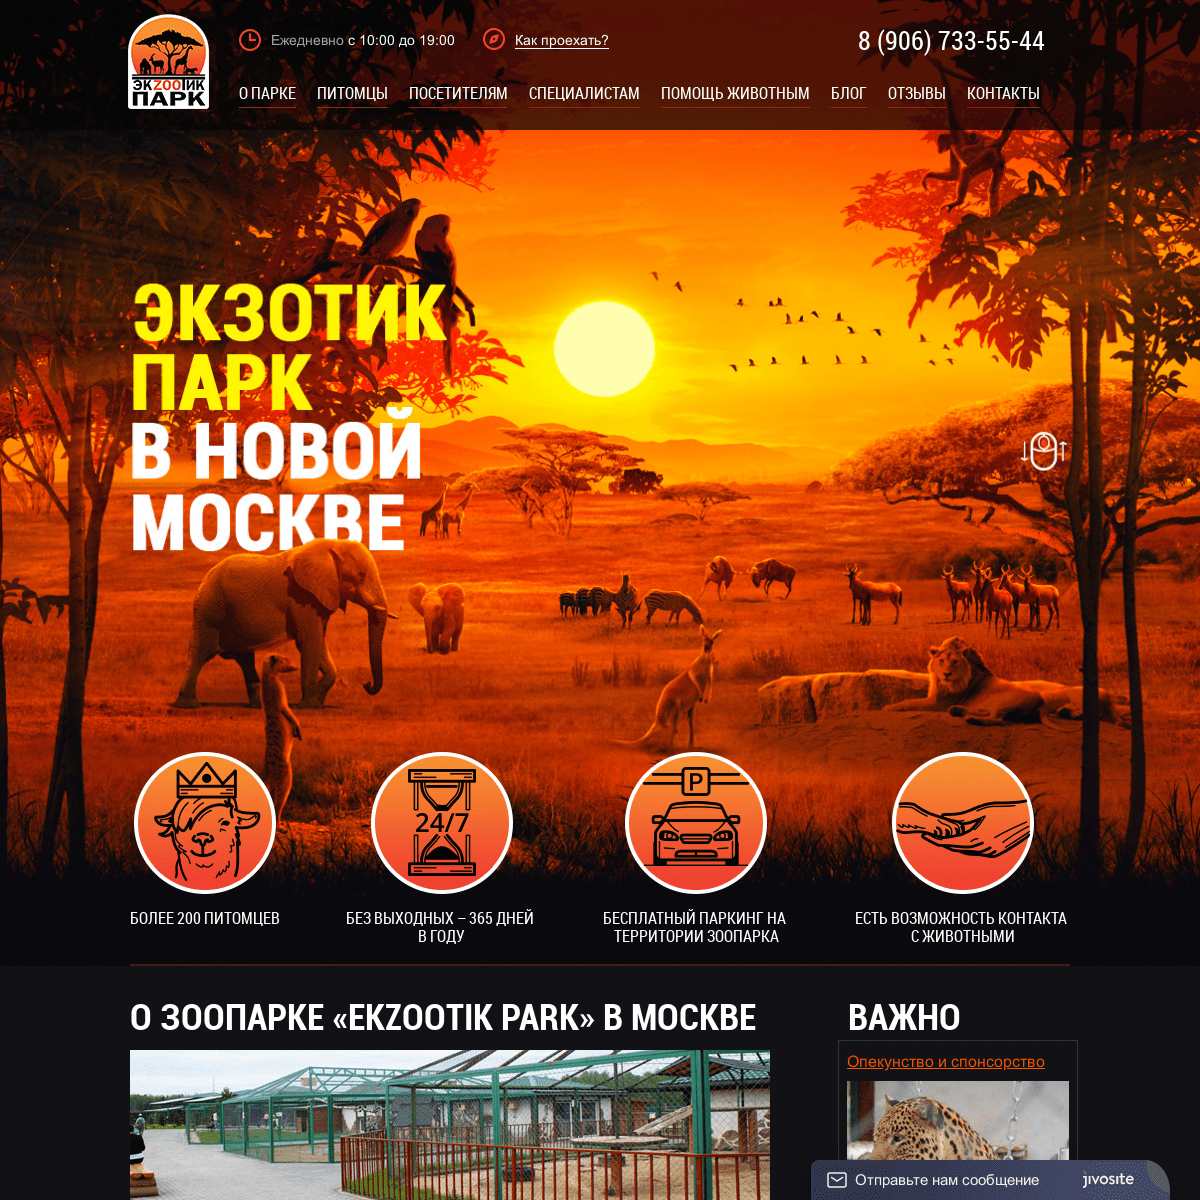 A complete backup of ekzootikpark.ru